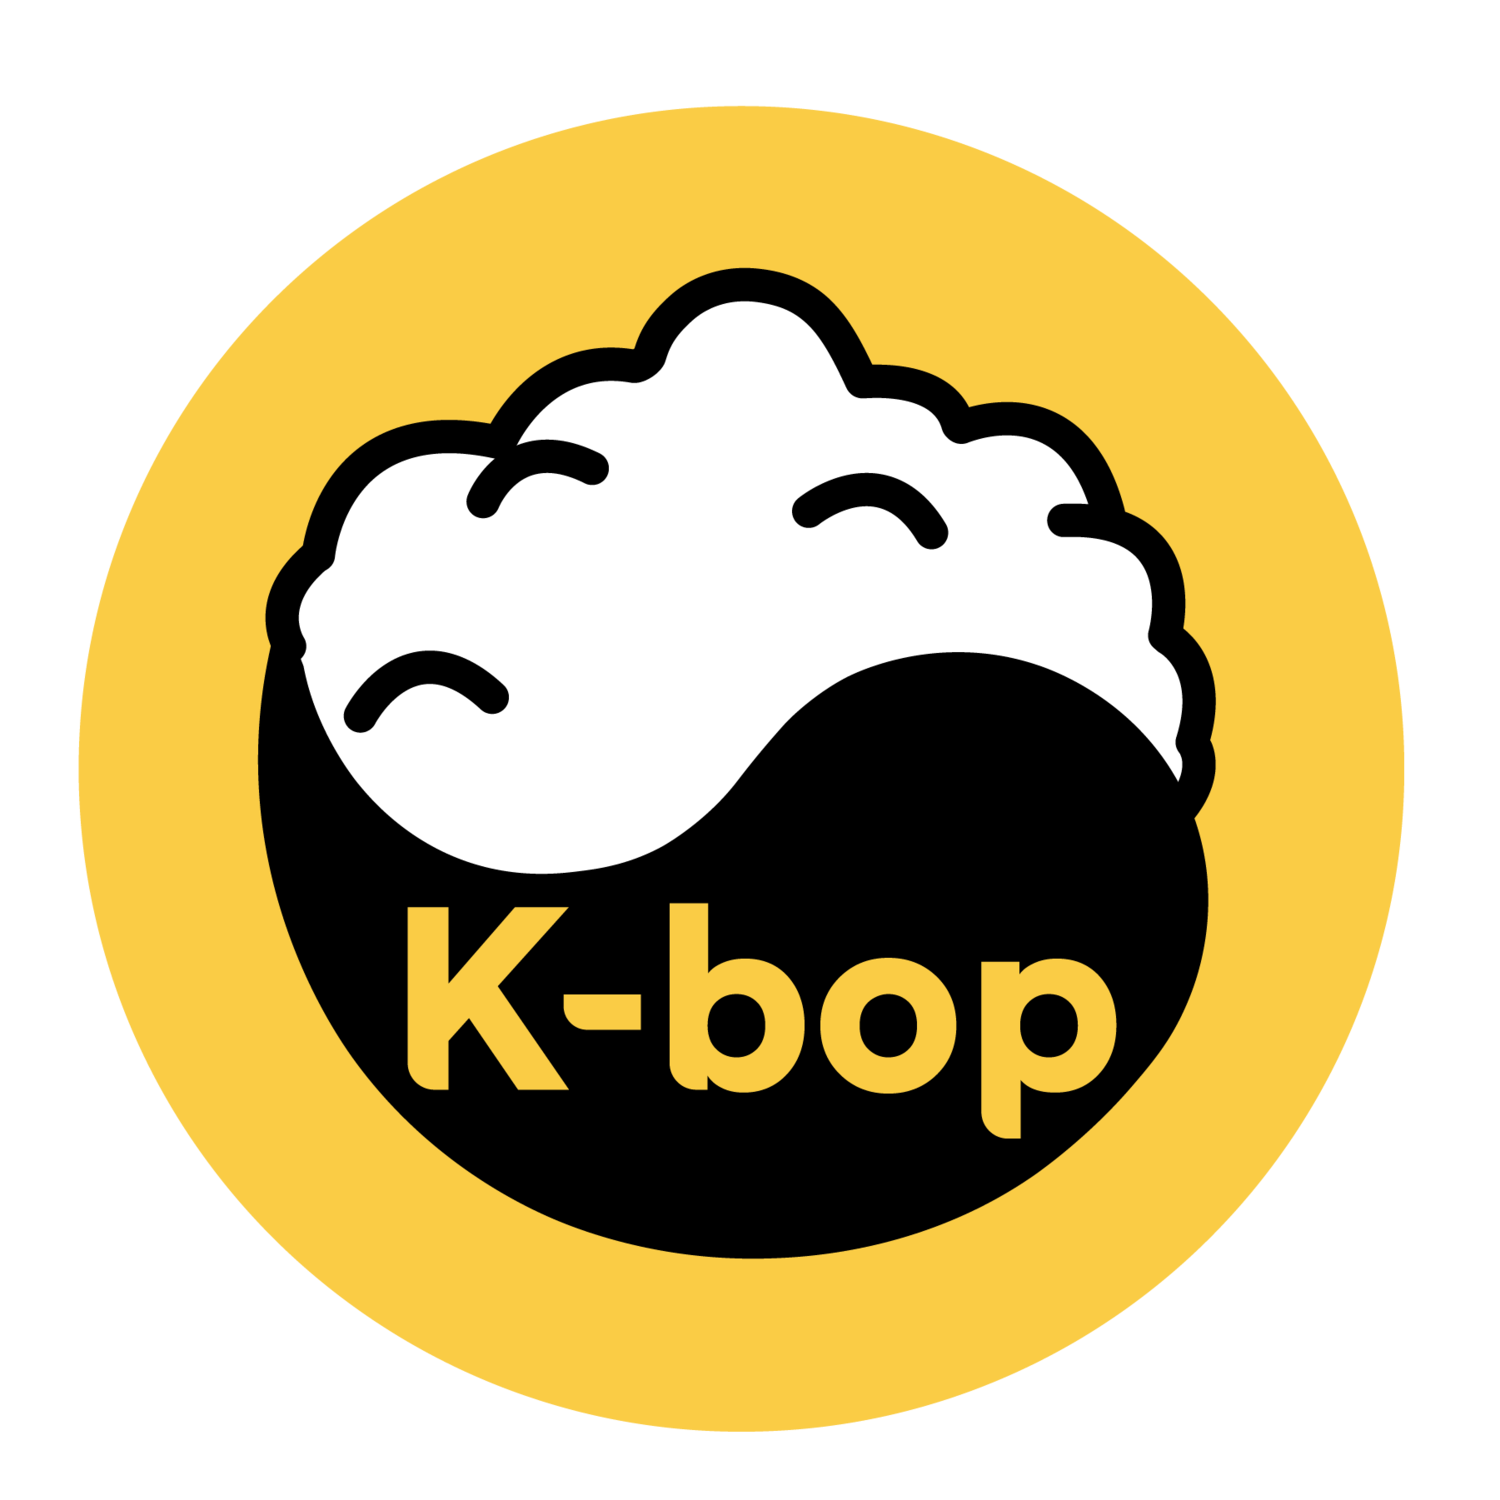 K-bop